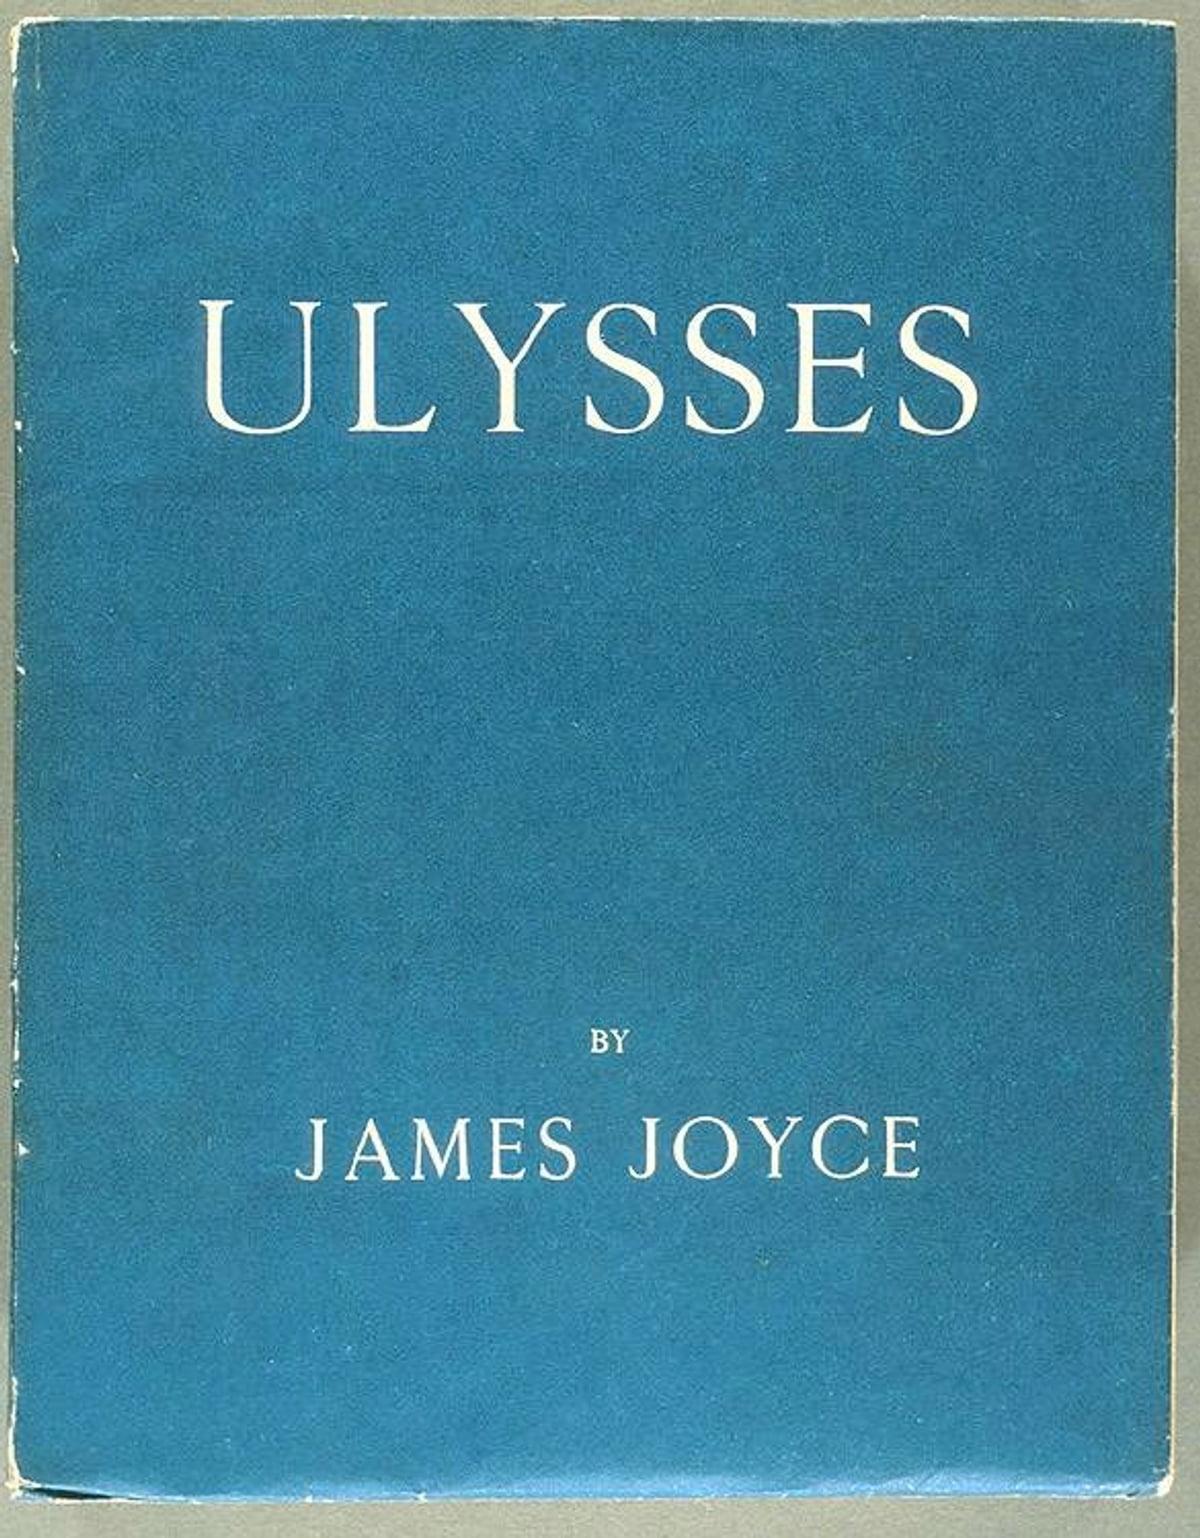 Ulysses - James Joyce görseli.